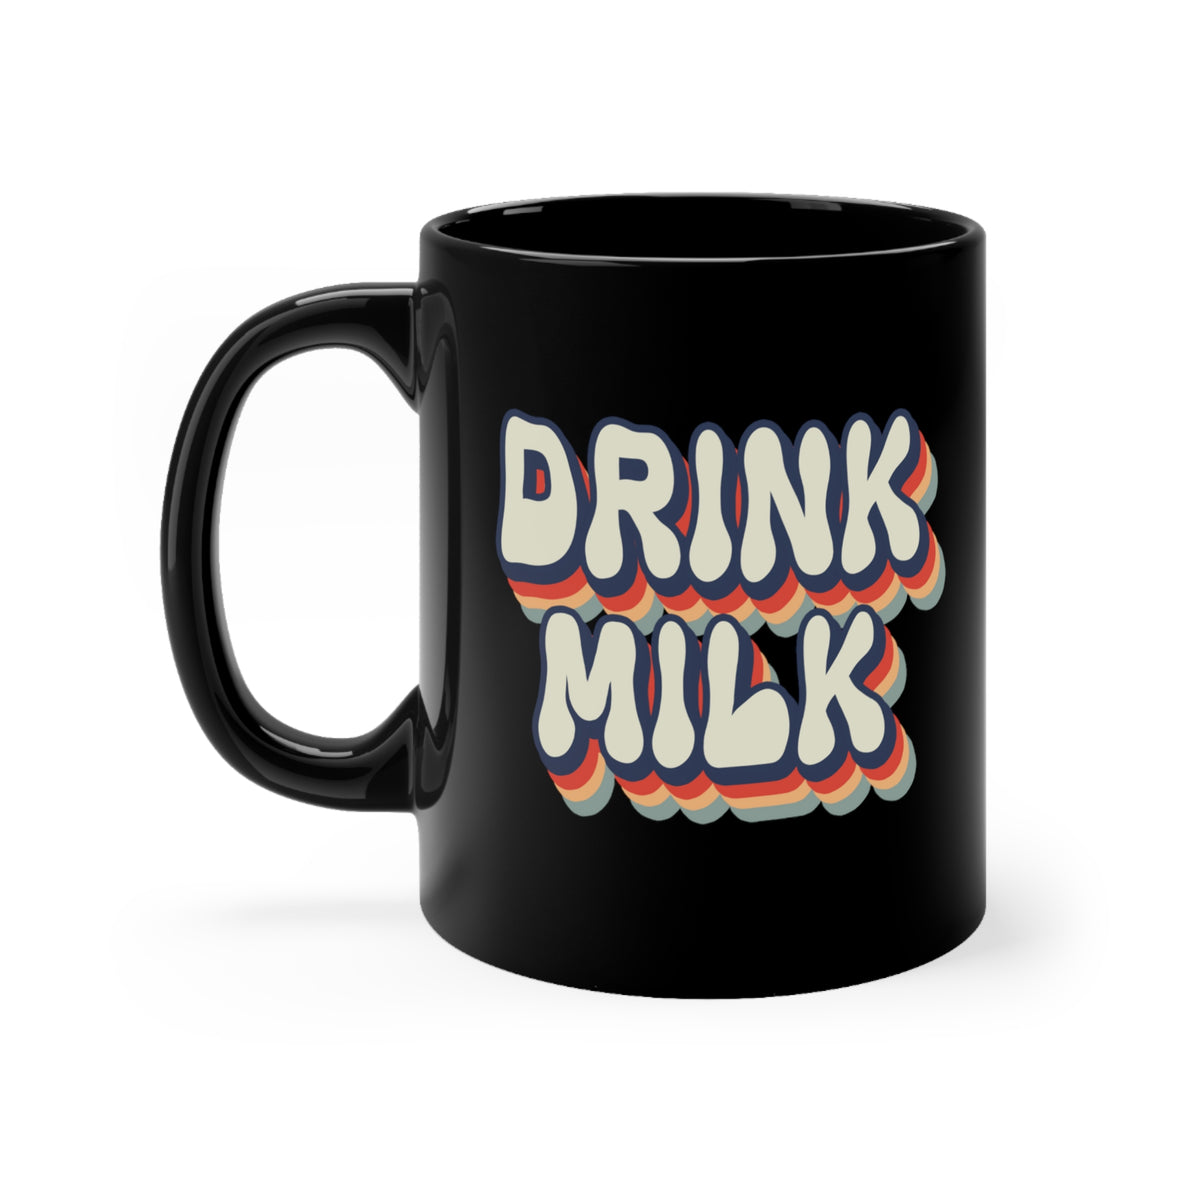 Funny Black Coffee Mug for Milk Lovers - Drink Milk - Retro - Vintage - Birthday Present - Christmas Gift